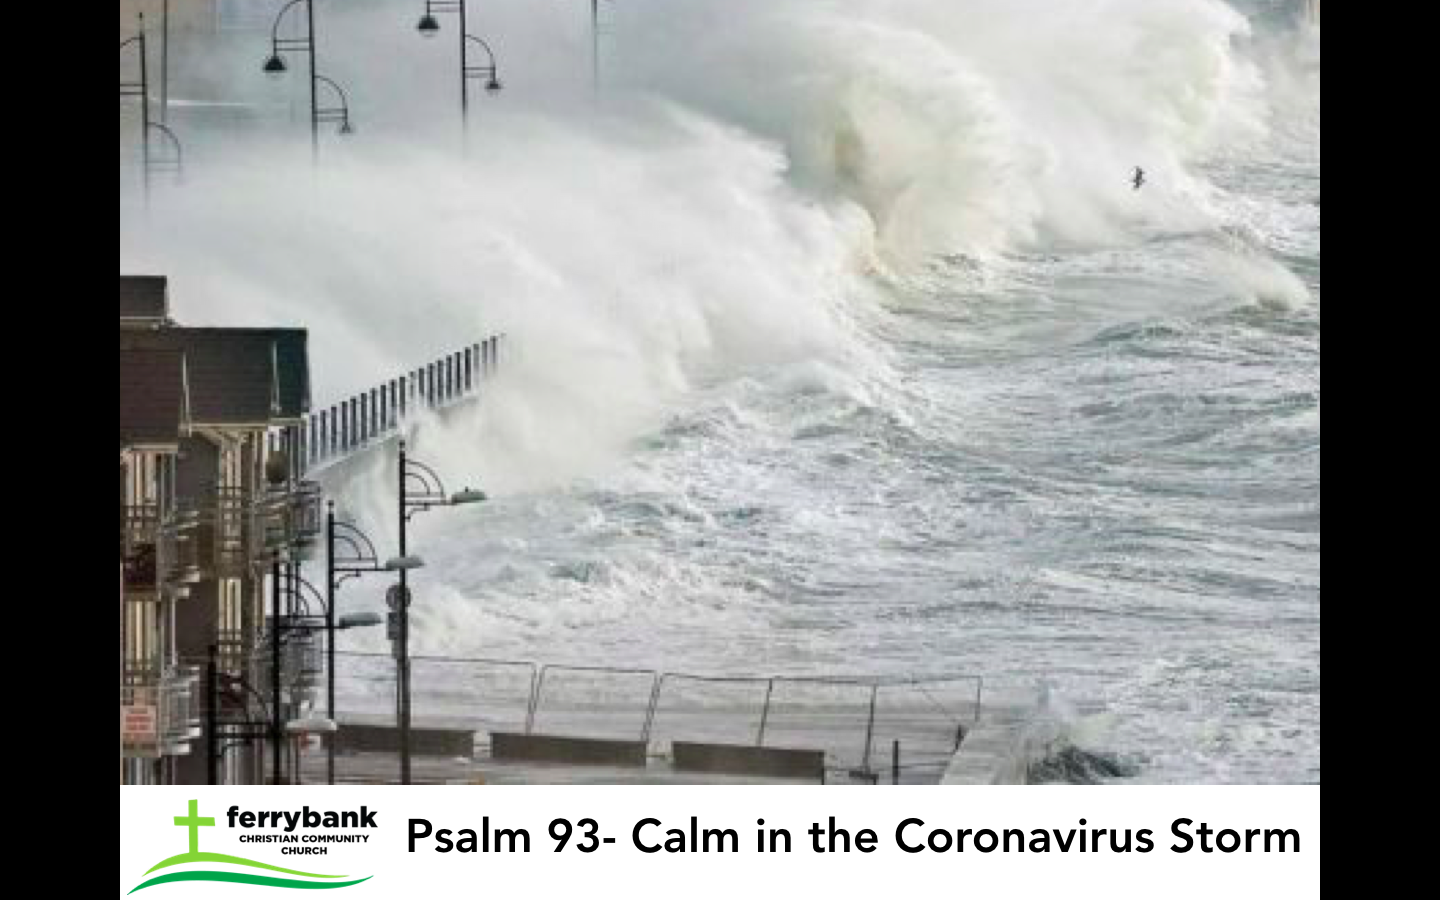 Psalm 93- Calm in the Coronavirus Storm